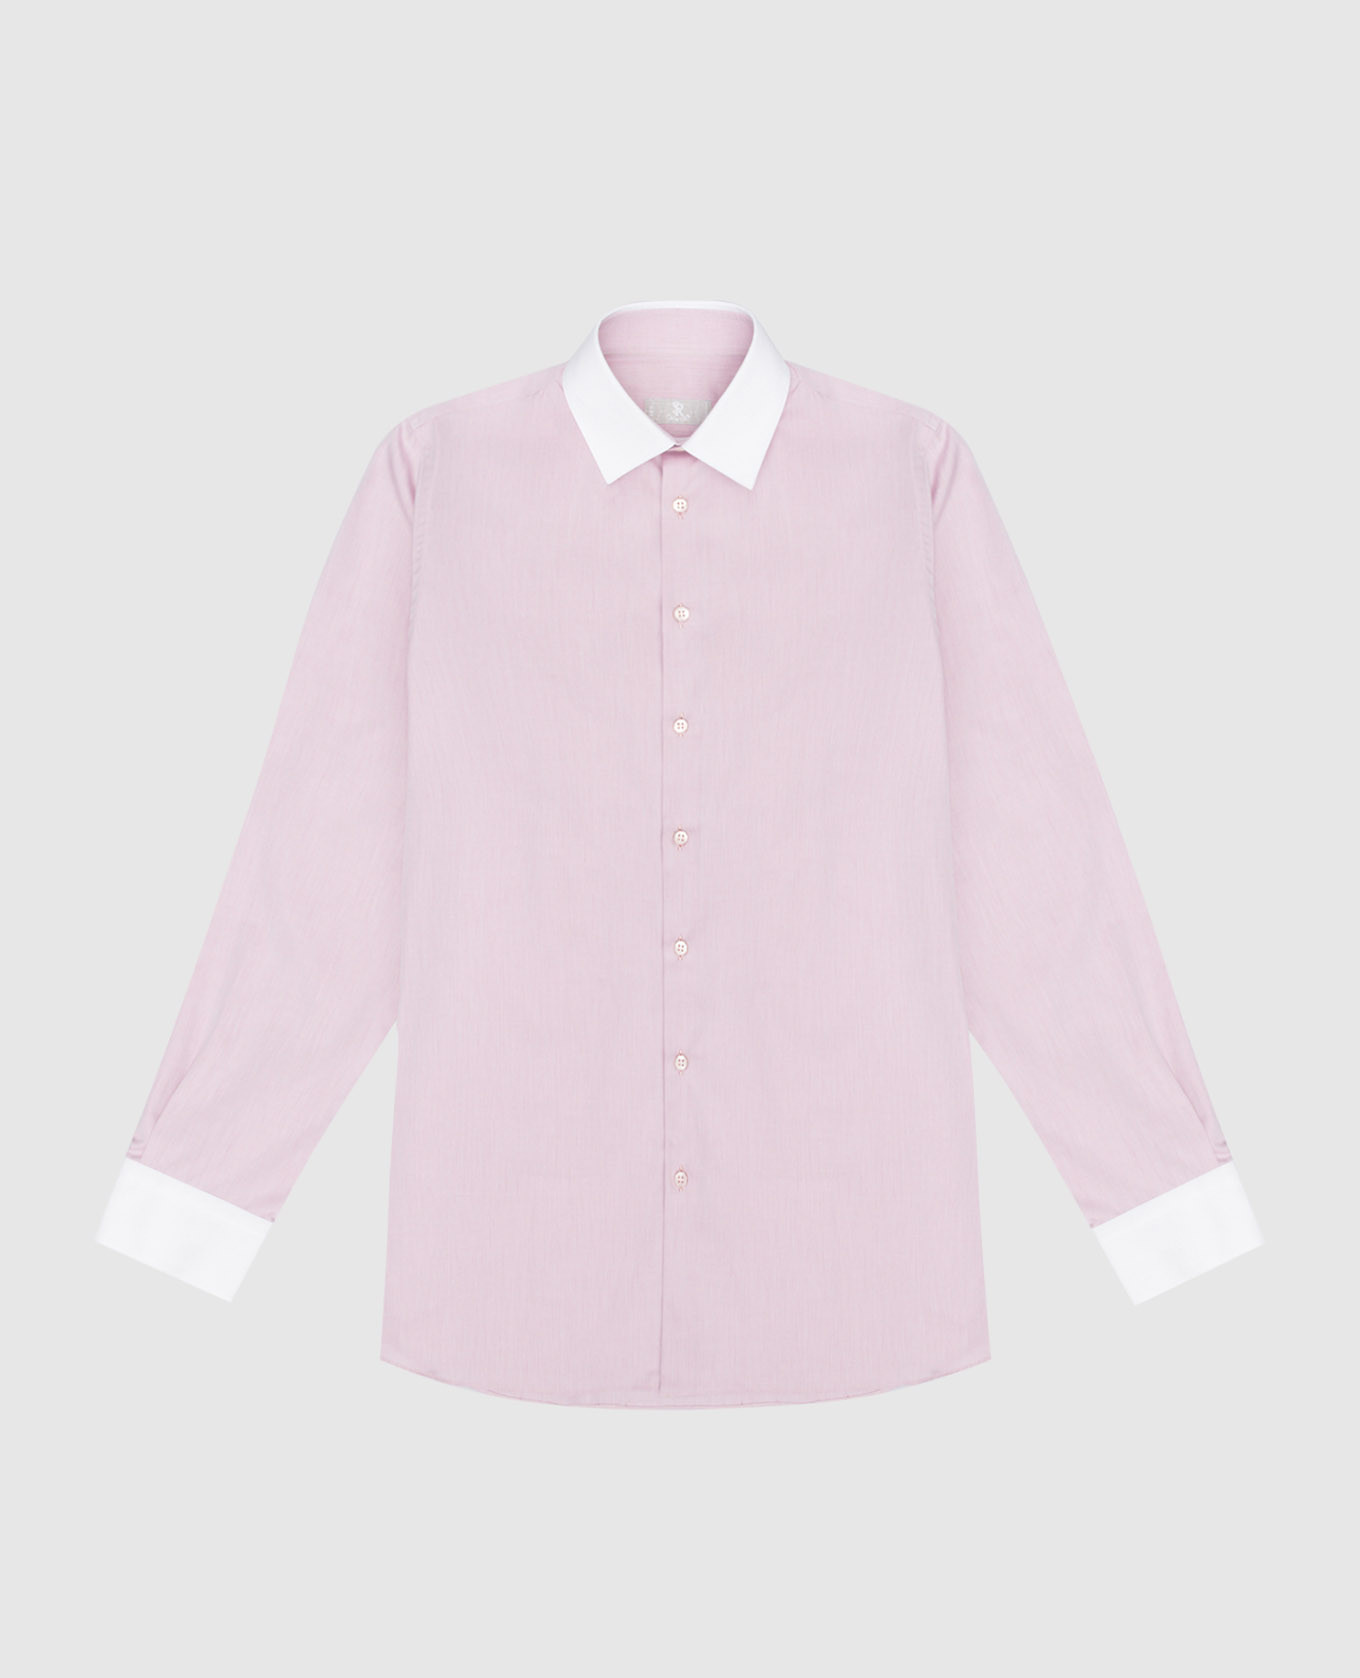 Children's pink shirt